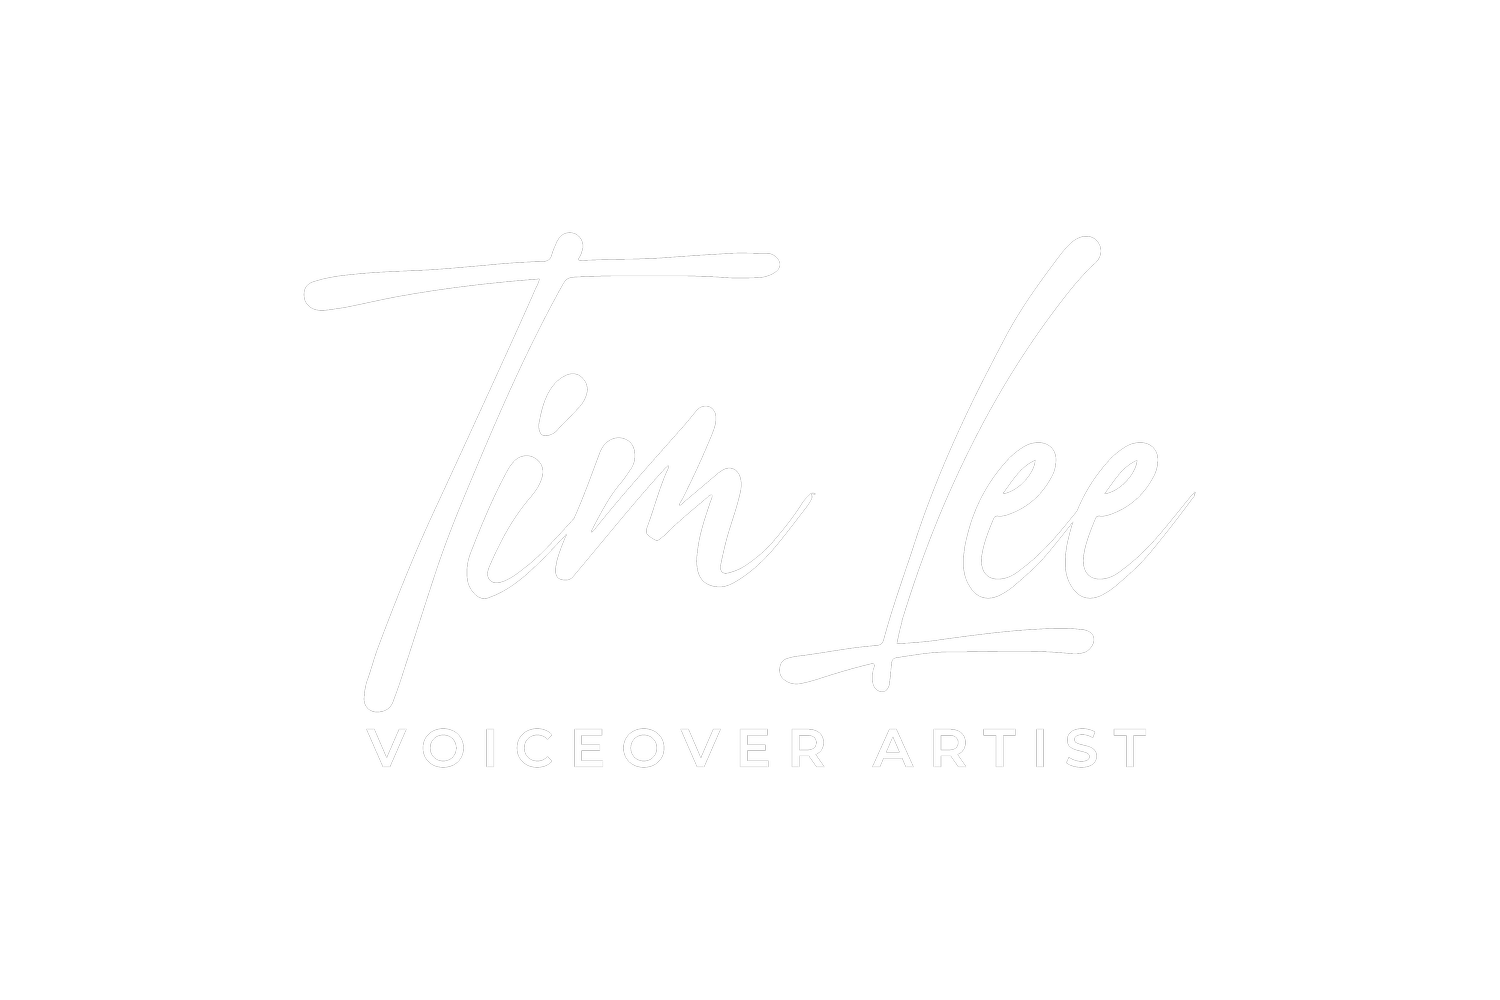 Tim Lee  North East VoiceOver artist